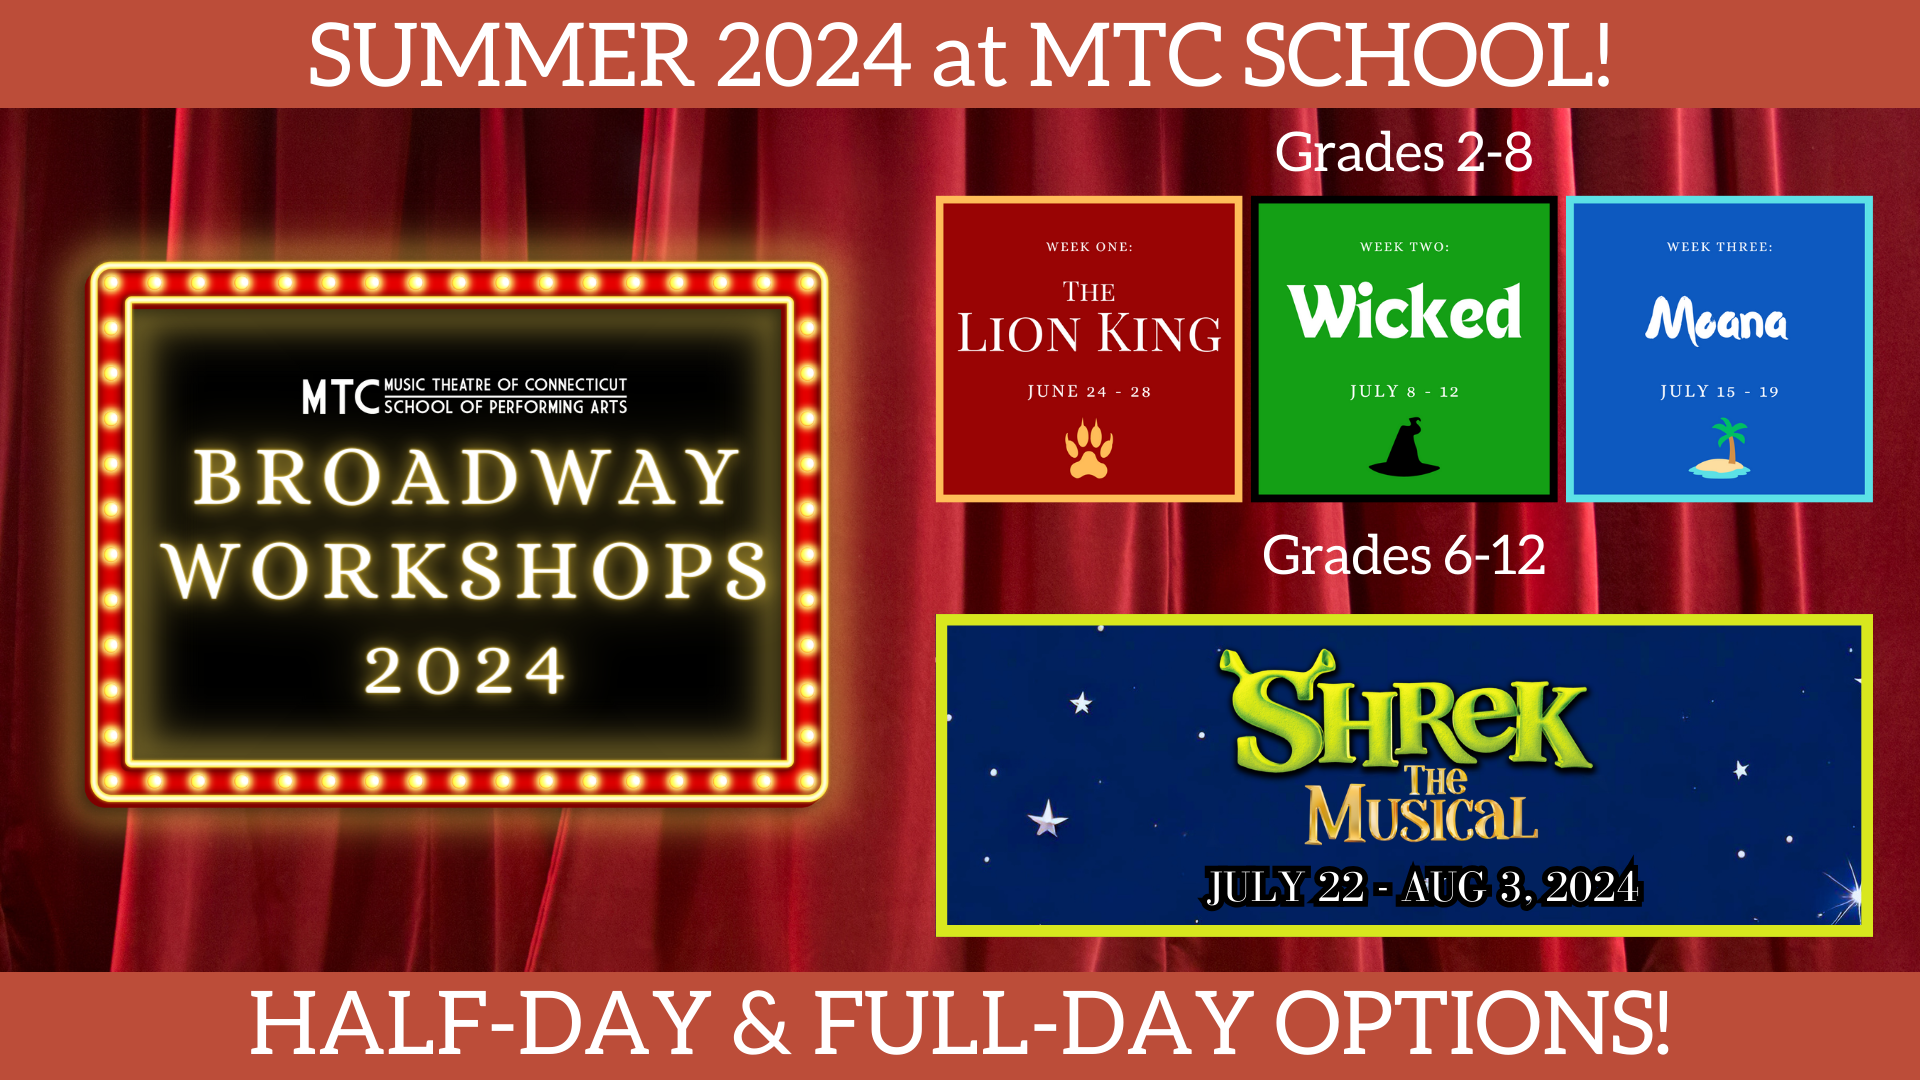 SUMMER 2024 at MTC SCHOOL Slideshow Lobby.png